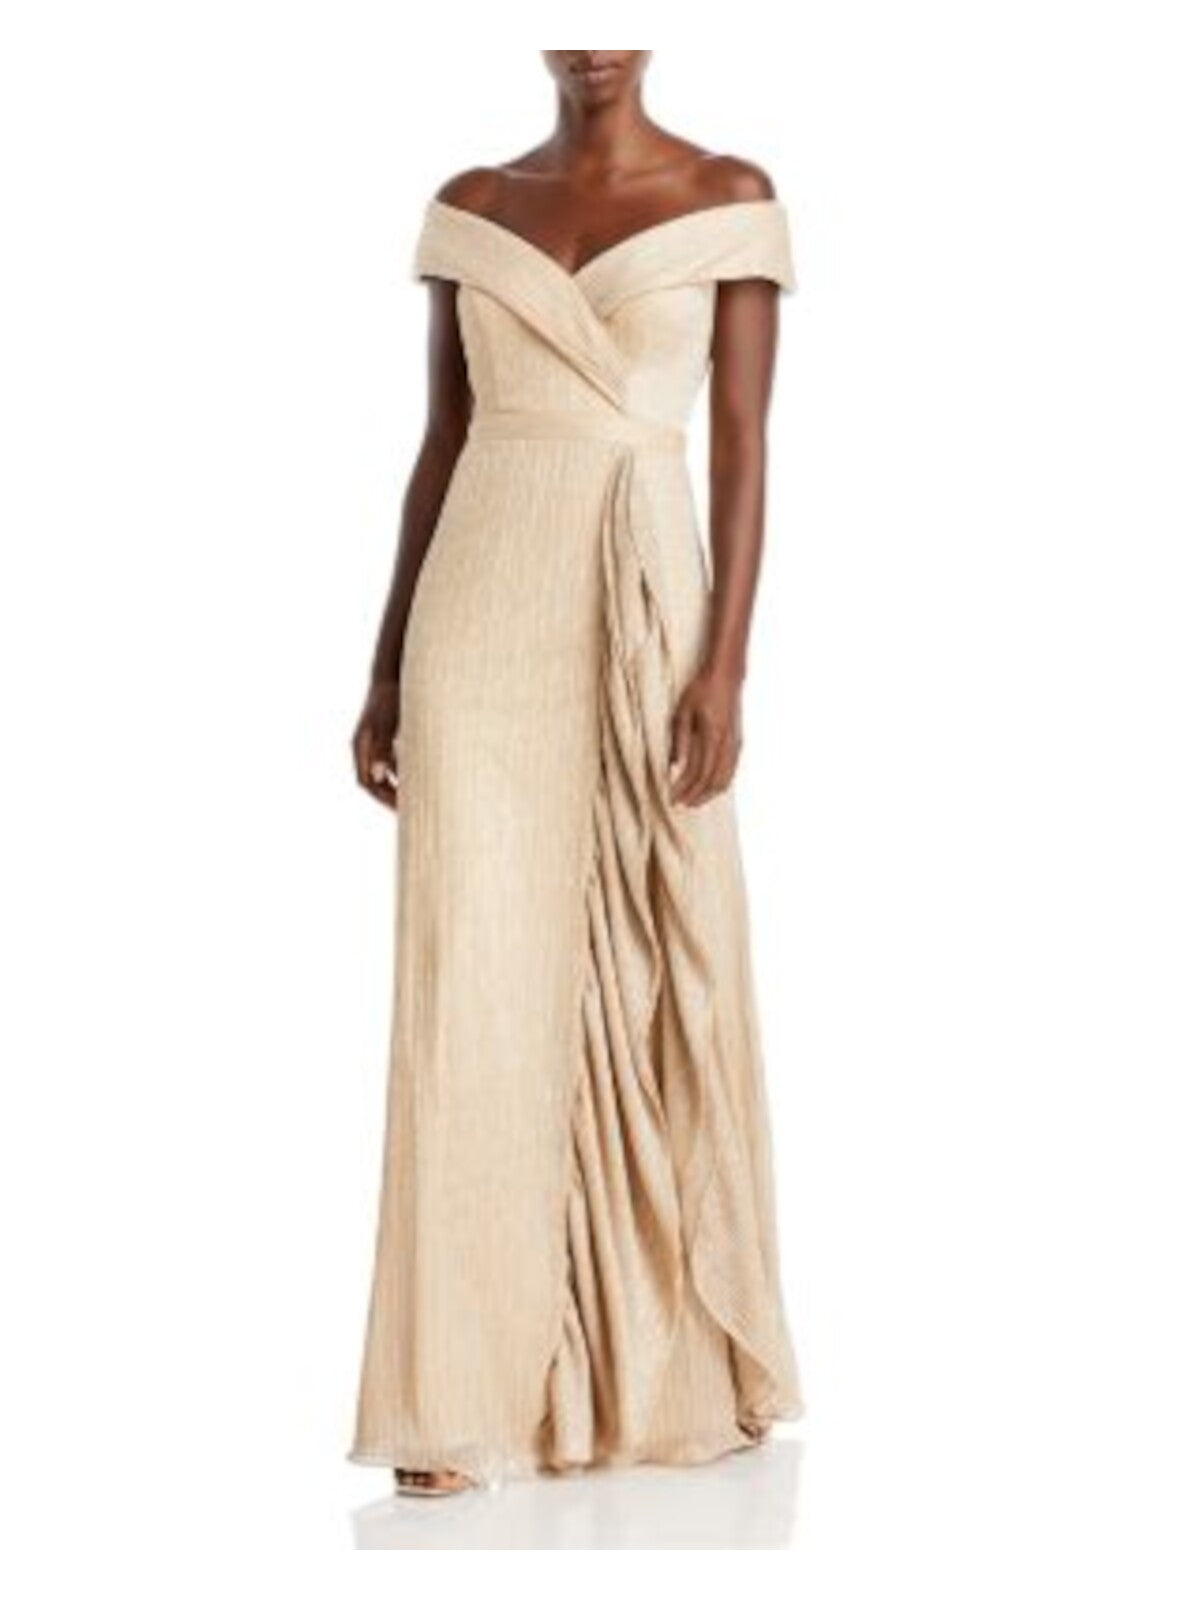 AQUA FORMAL Womens Gold Ruffled Zippered Lined Short Sleeve Off Shoulder Full-Length Evening Gown Dress 4